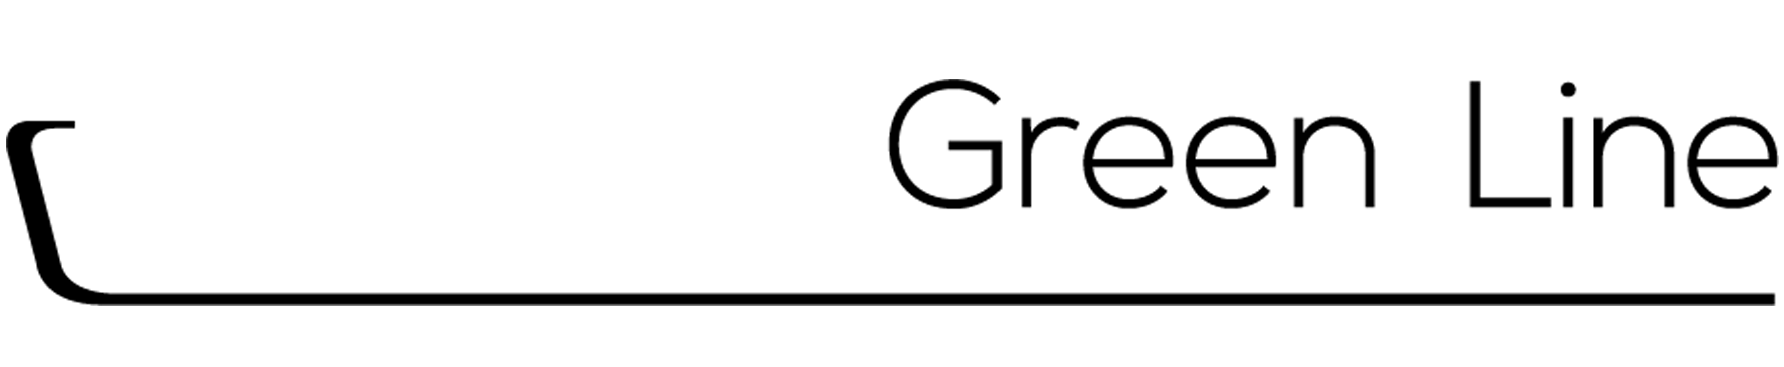 Dosatron Groene Lijn logo